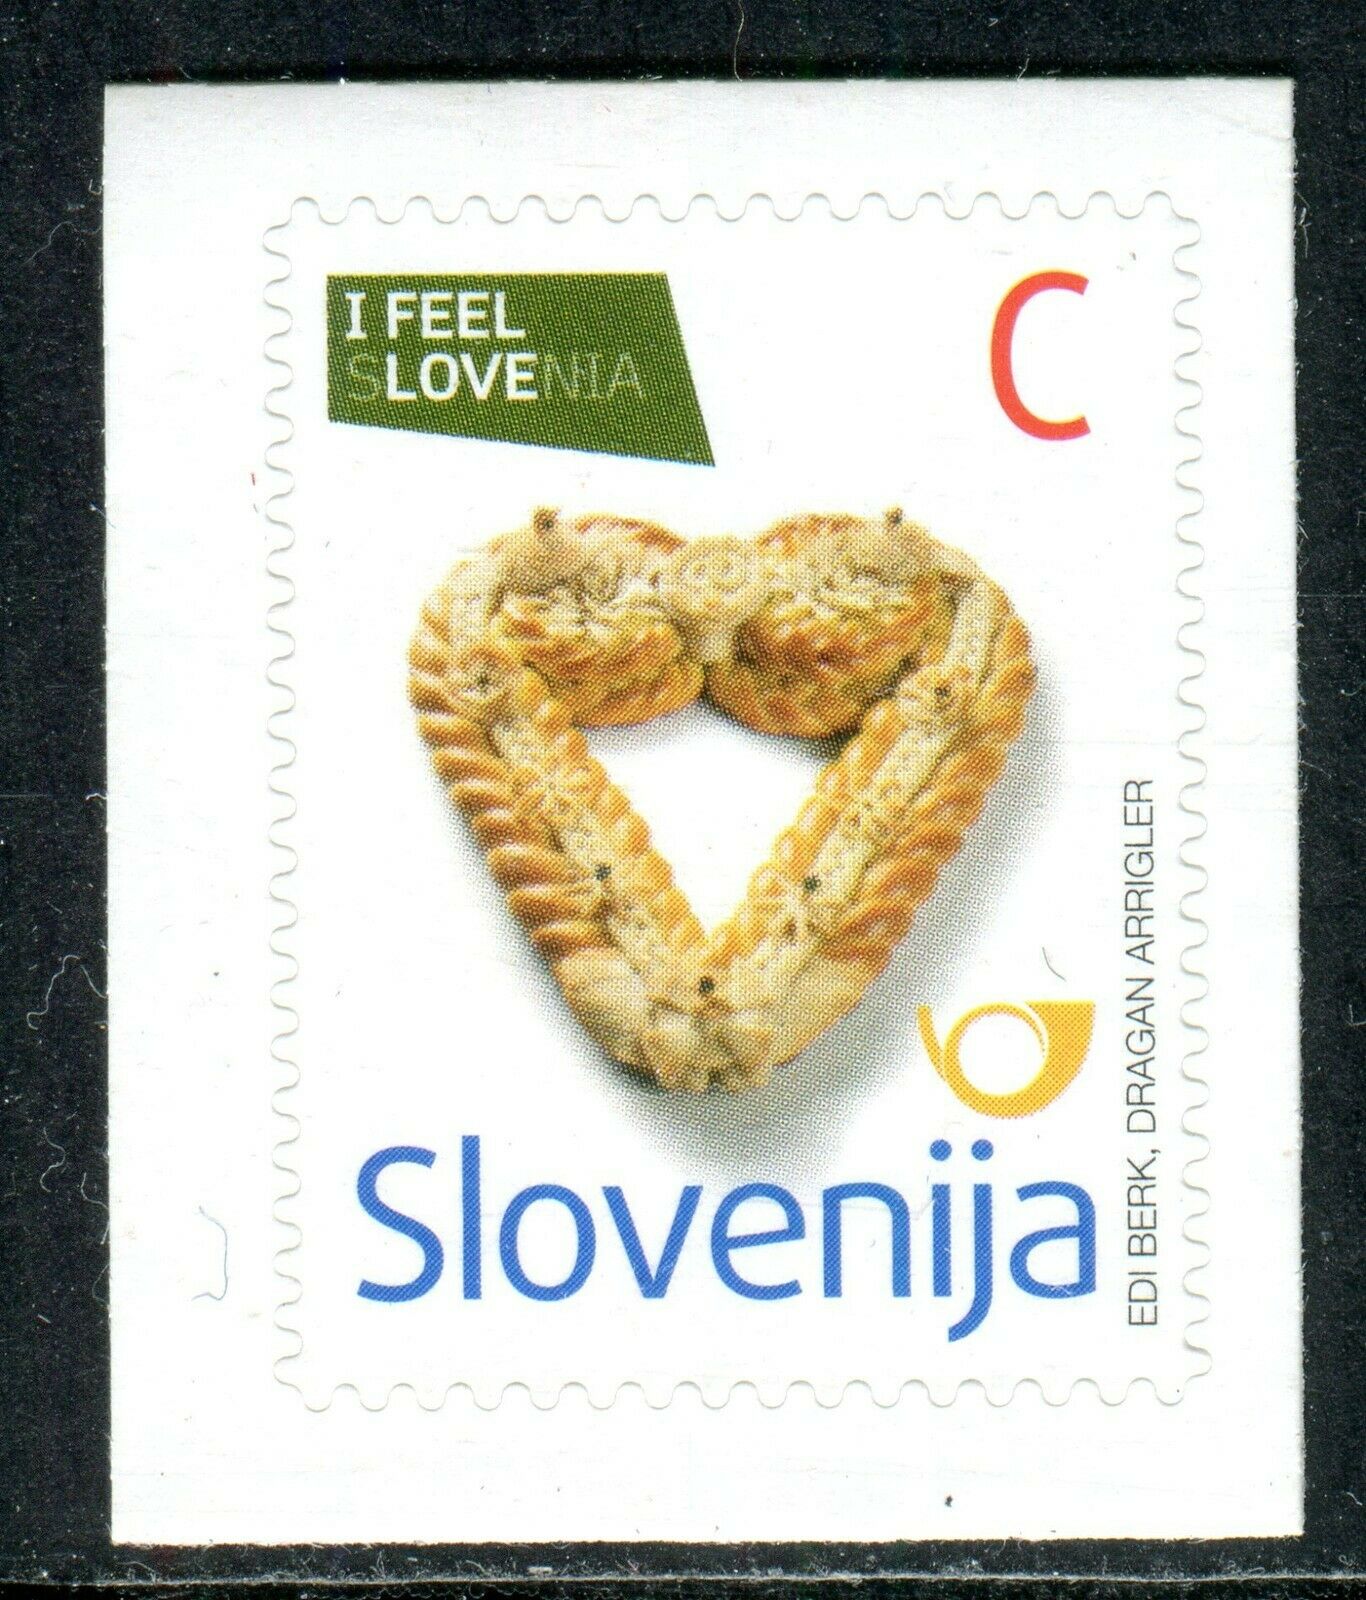 728 - SLOVENIA 2009 - Slovenian brand - I feel Slovenia - MNH Set